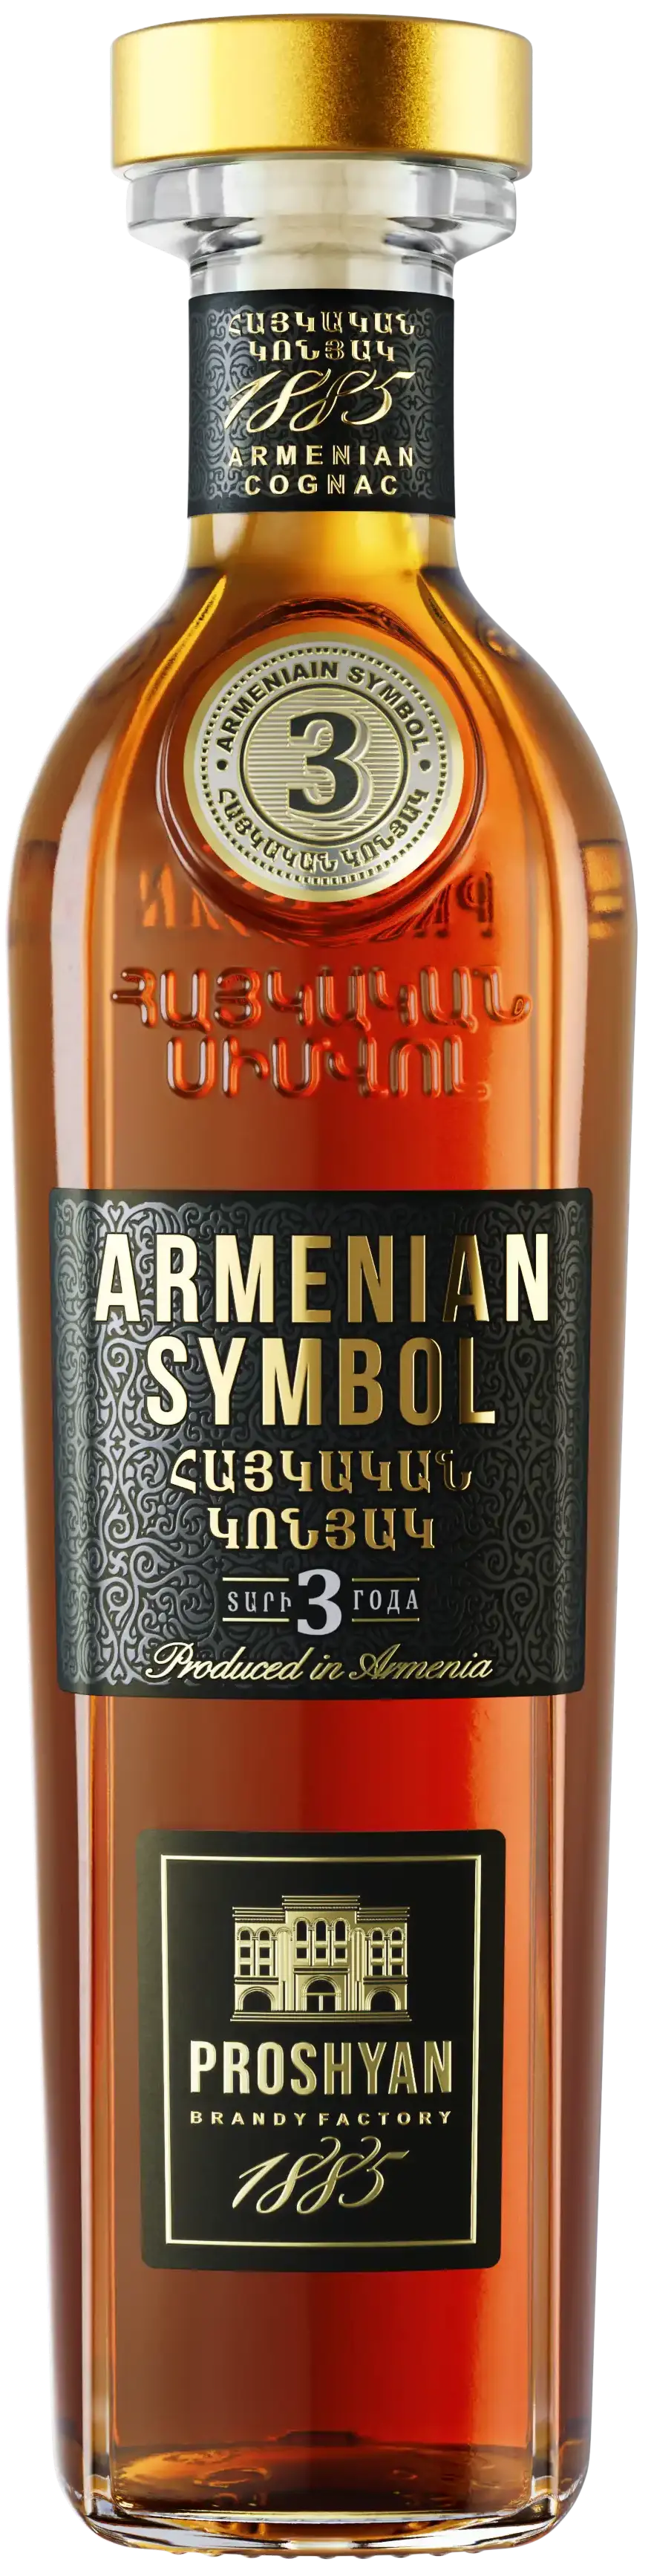 Армянский Символ 3 года (Armenian Symbol 3 Years Old)